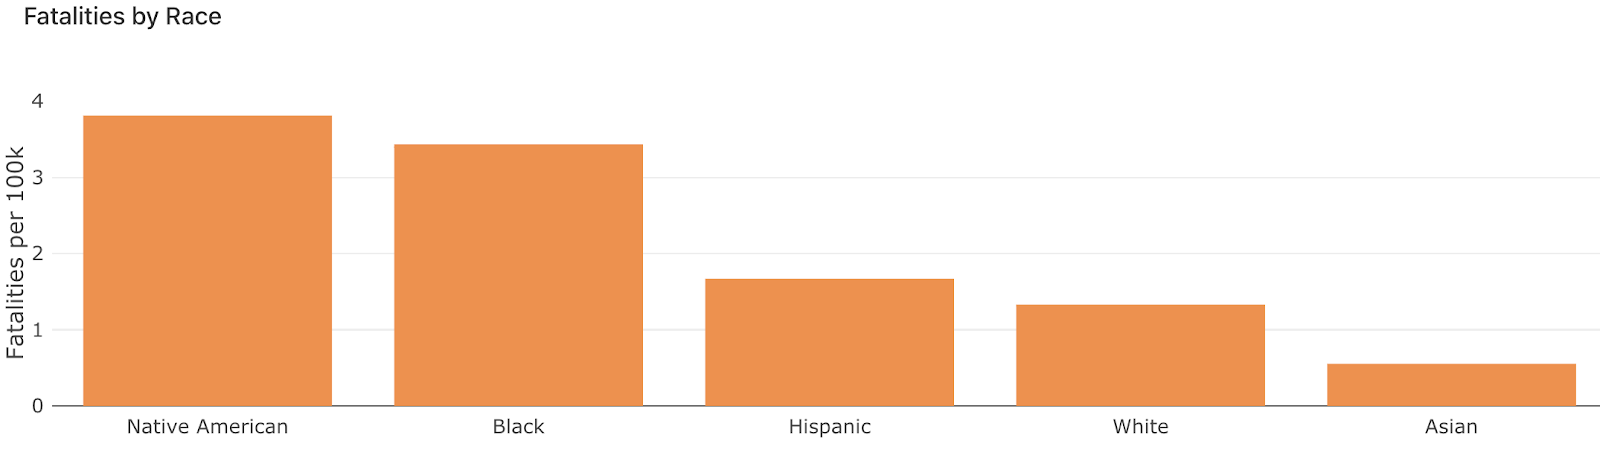 Fatal police shootings by race in 2015–2020